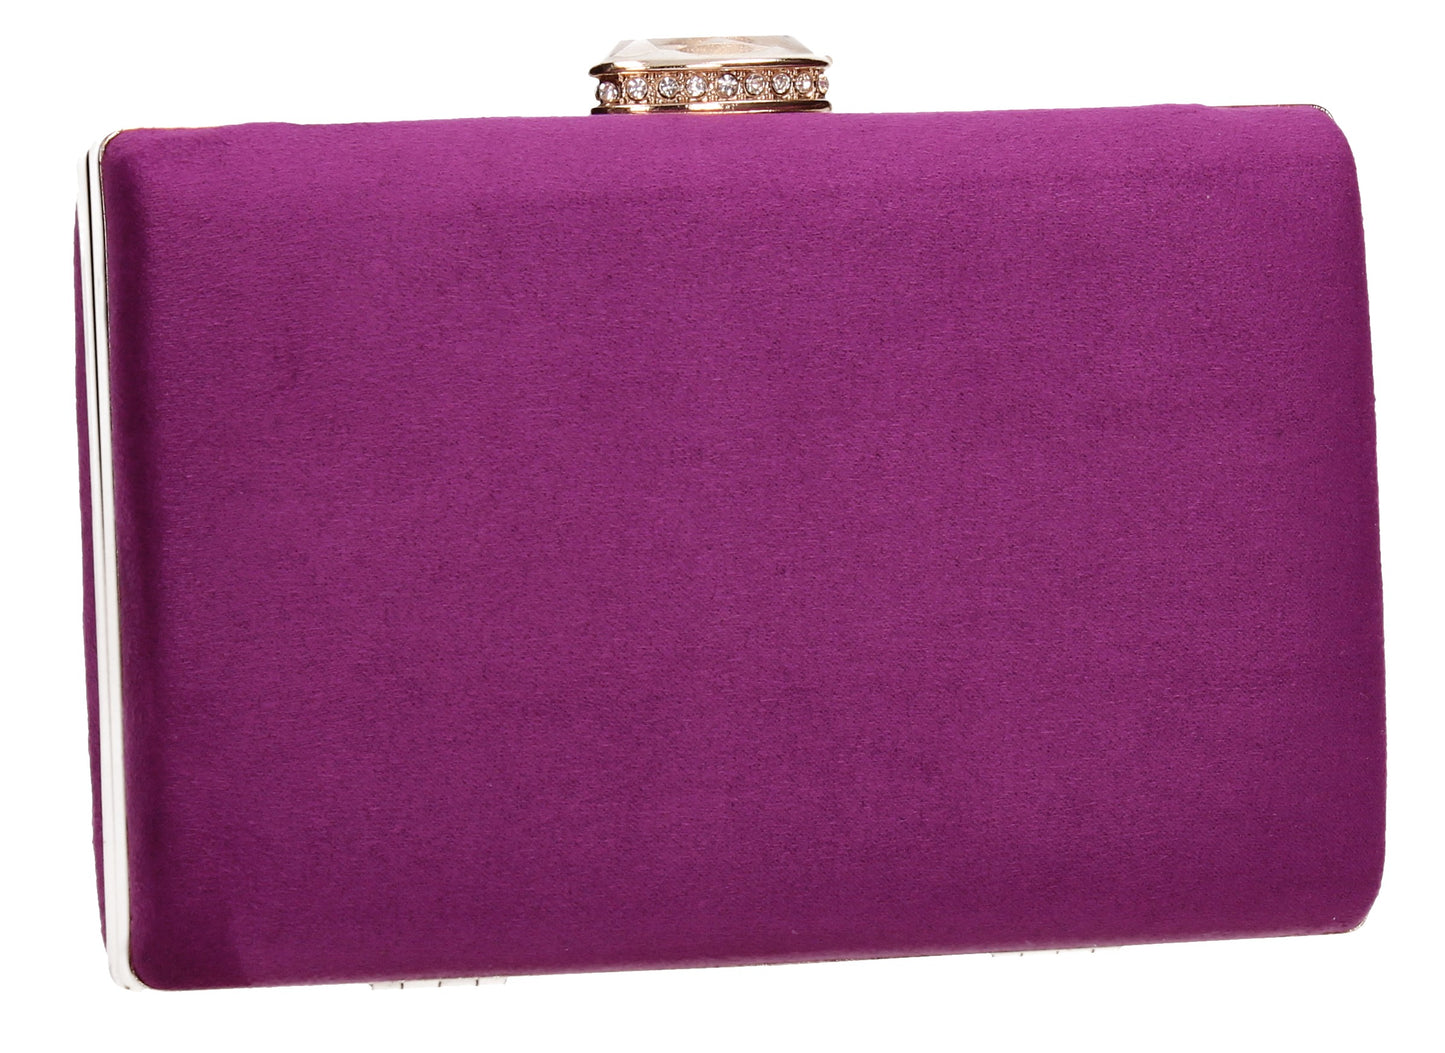 SWANKYSWANS Surrey Clutch Bag Purple Cute Cheap Clutch Bag For Weddings School and Work